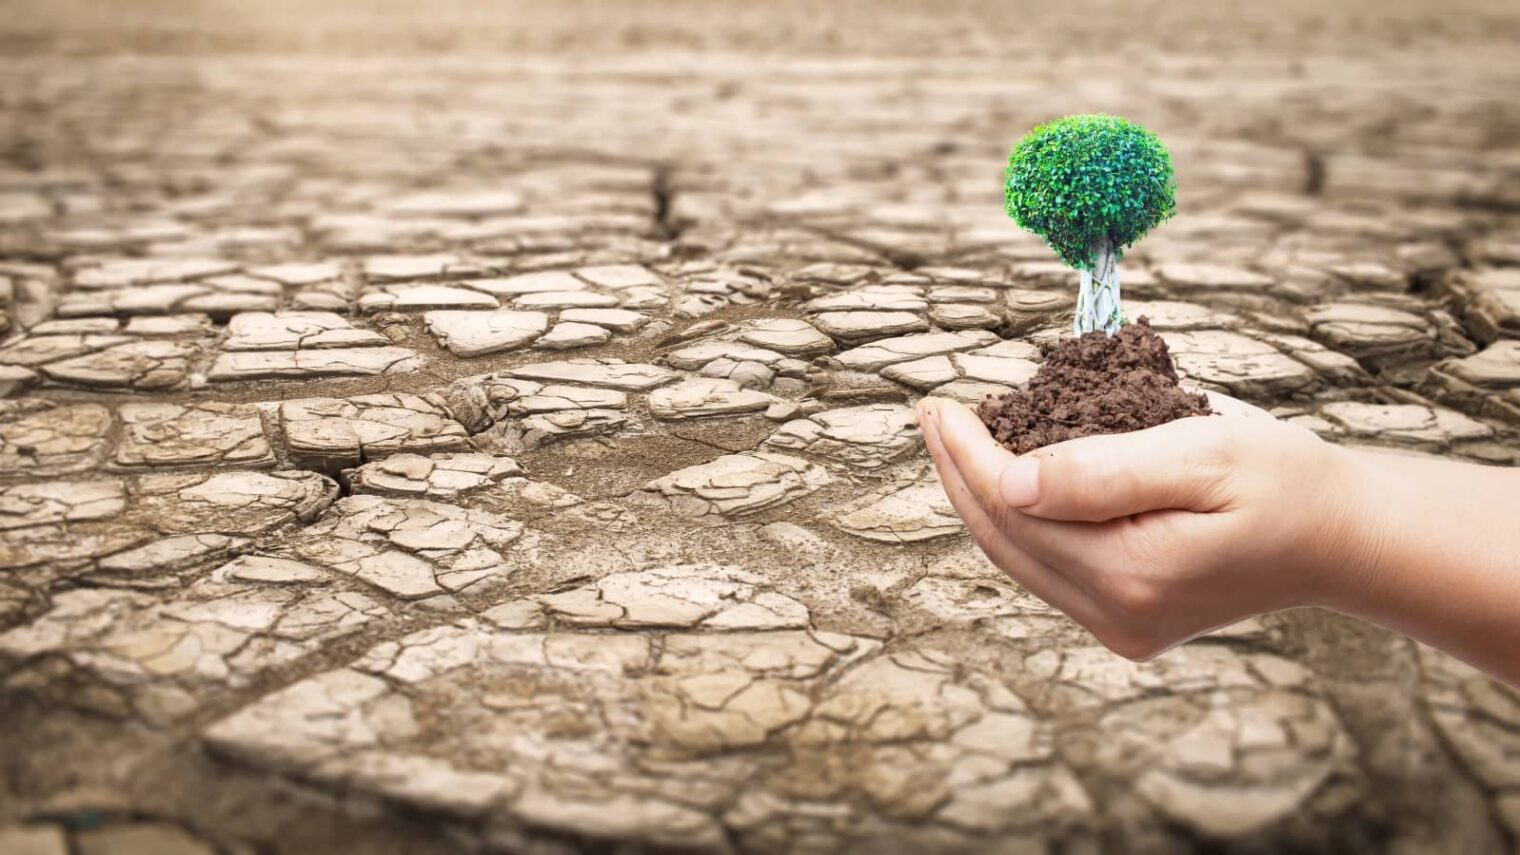 DeserTech is helping Africa fight desertification. Photo illustration by Paul Shuang via Shutterstock.com